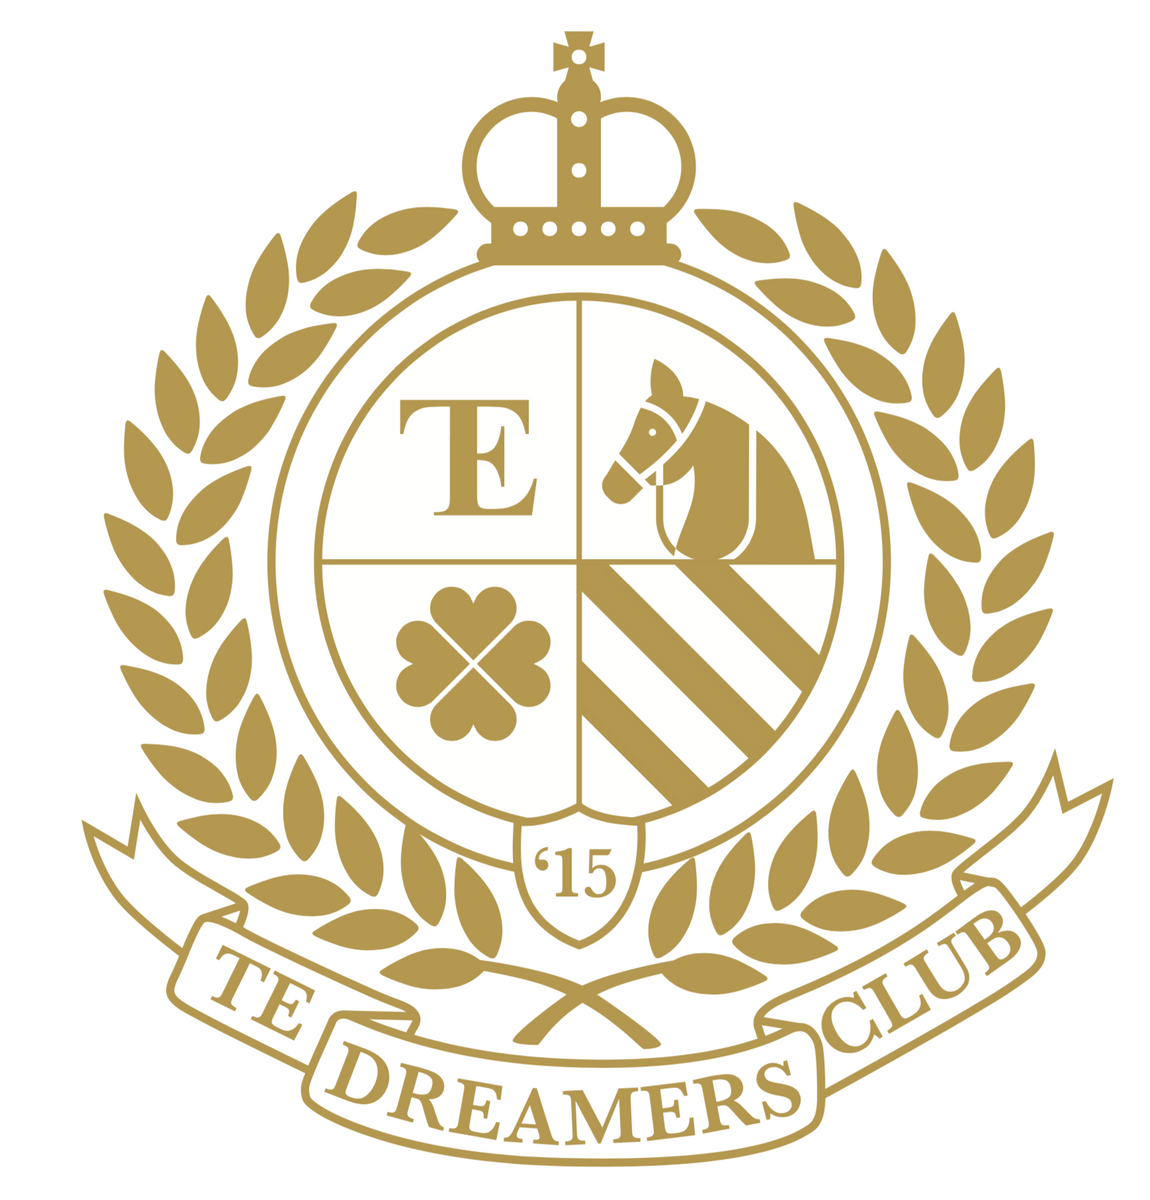 TE Dreamers Club